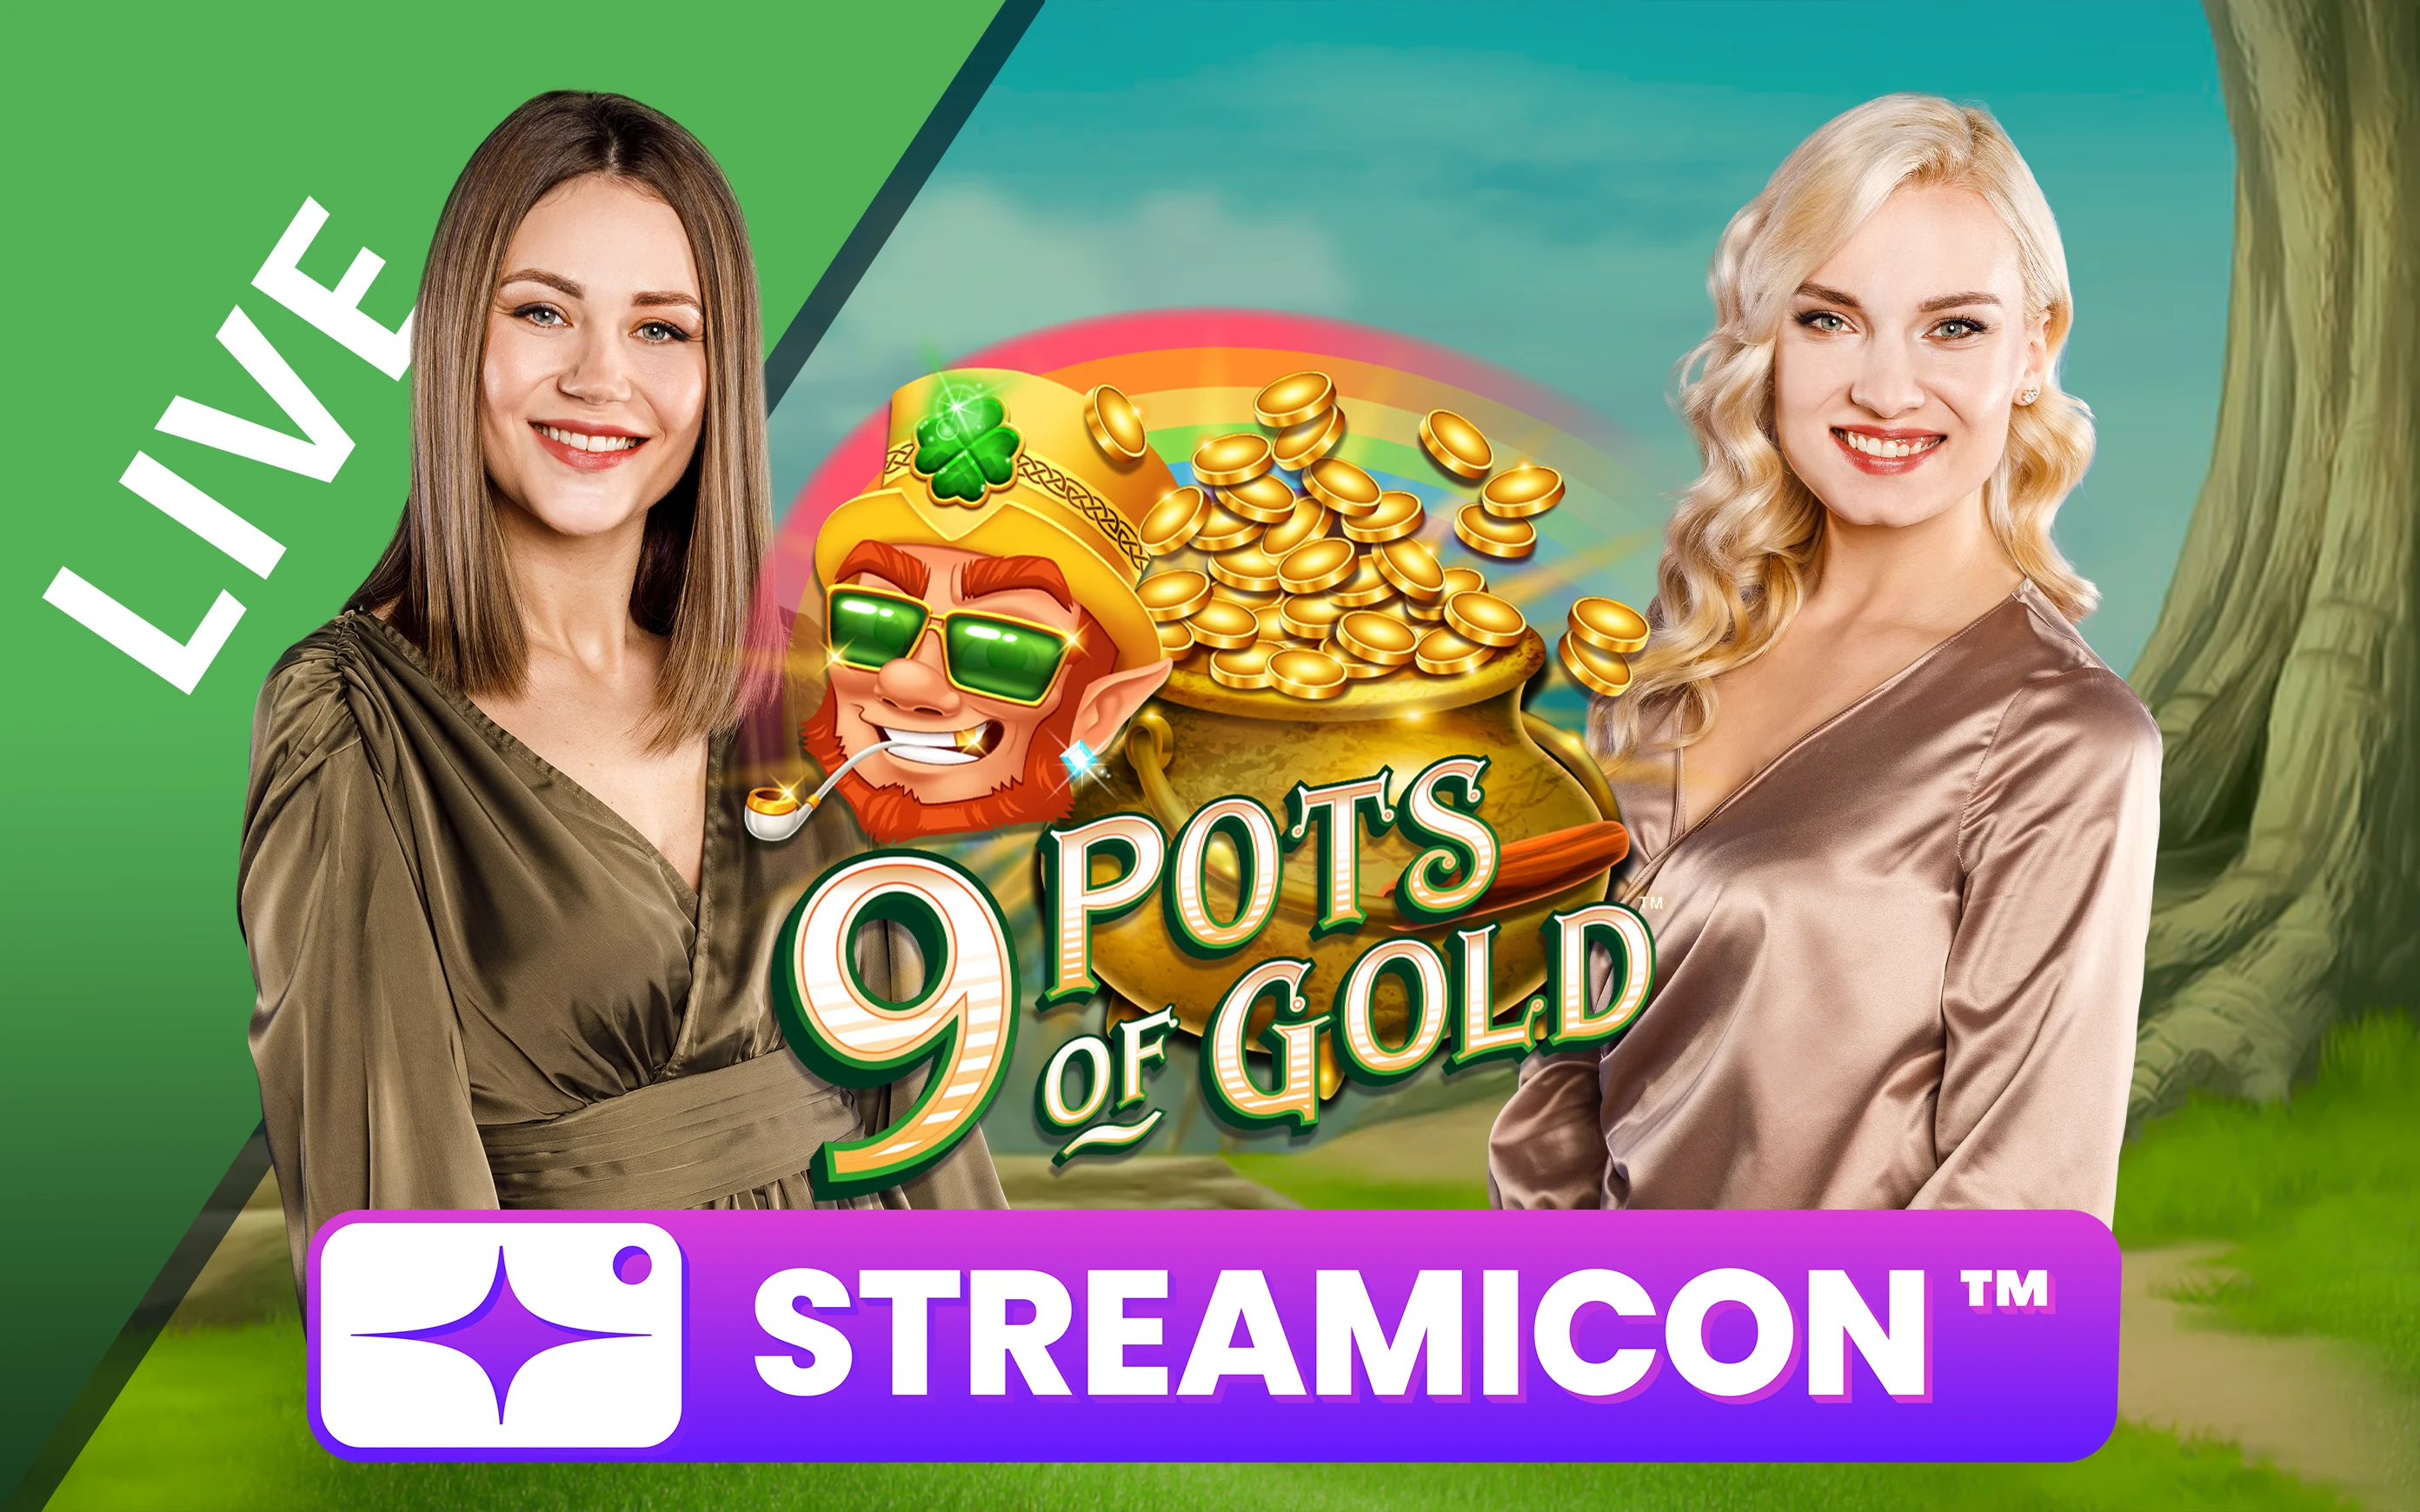 在Starcasino.be在线赌场上玩9 Pots of Gold™ Streamicon™